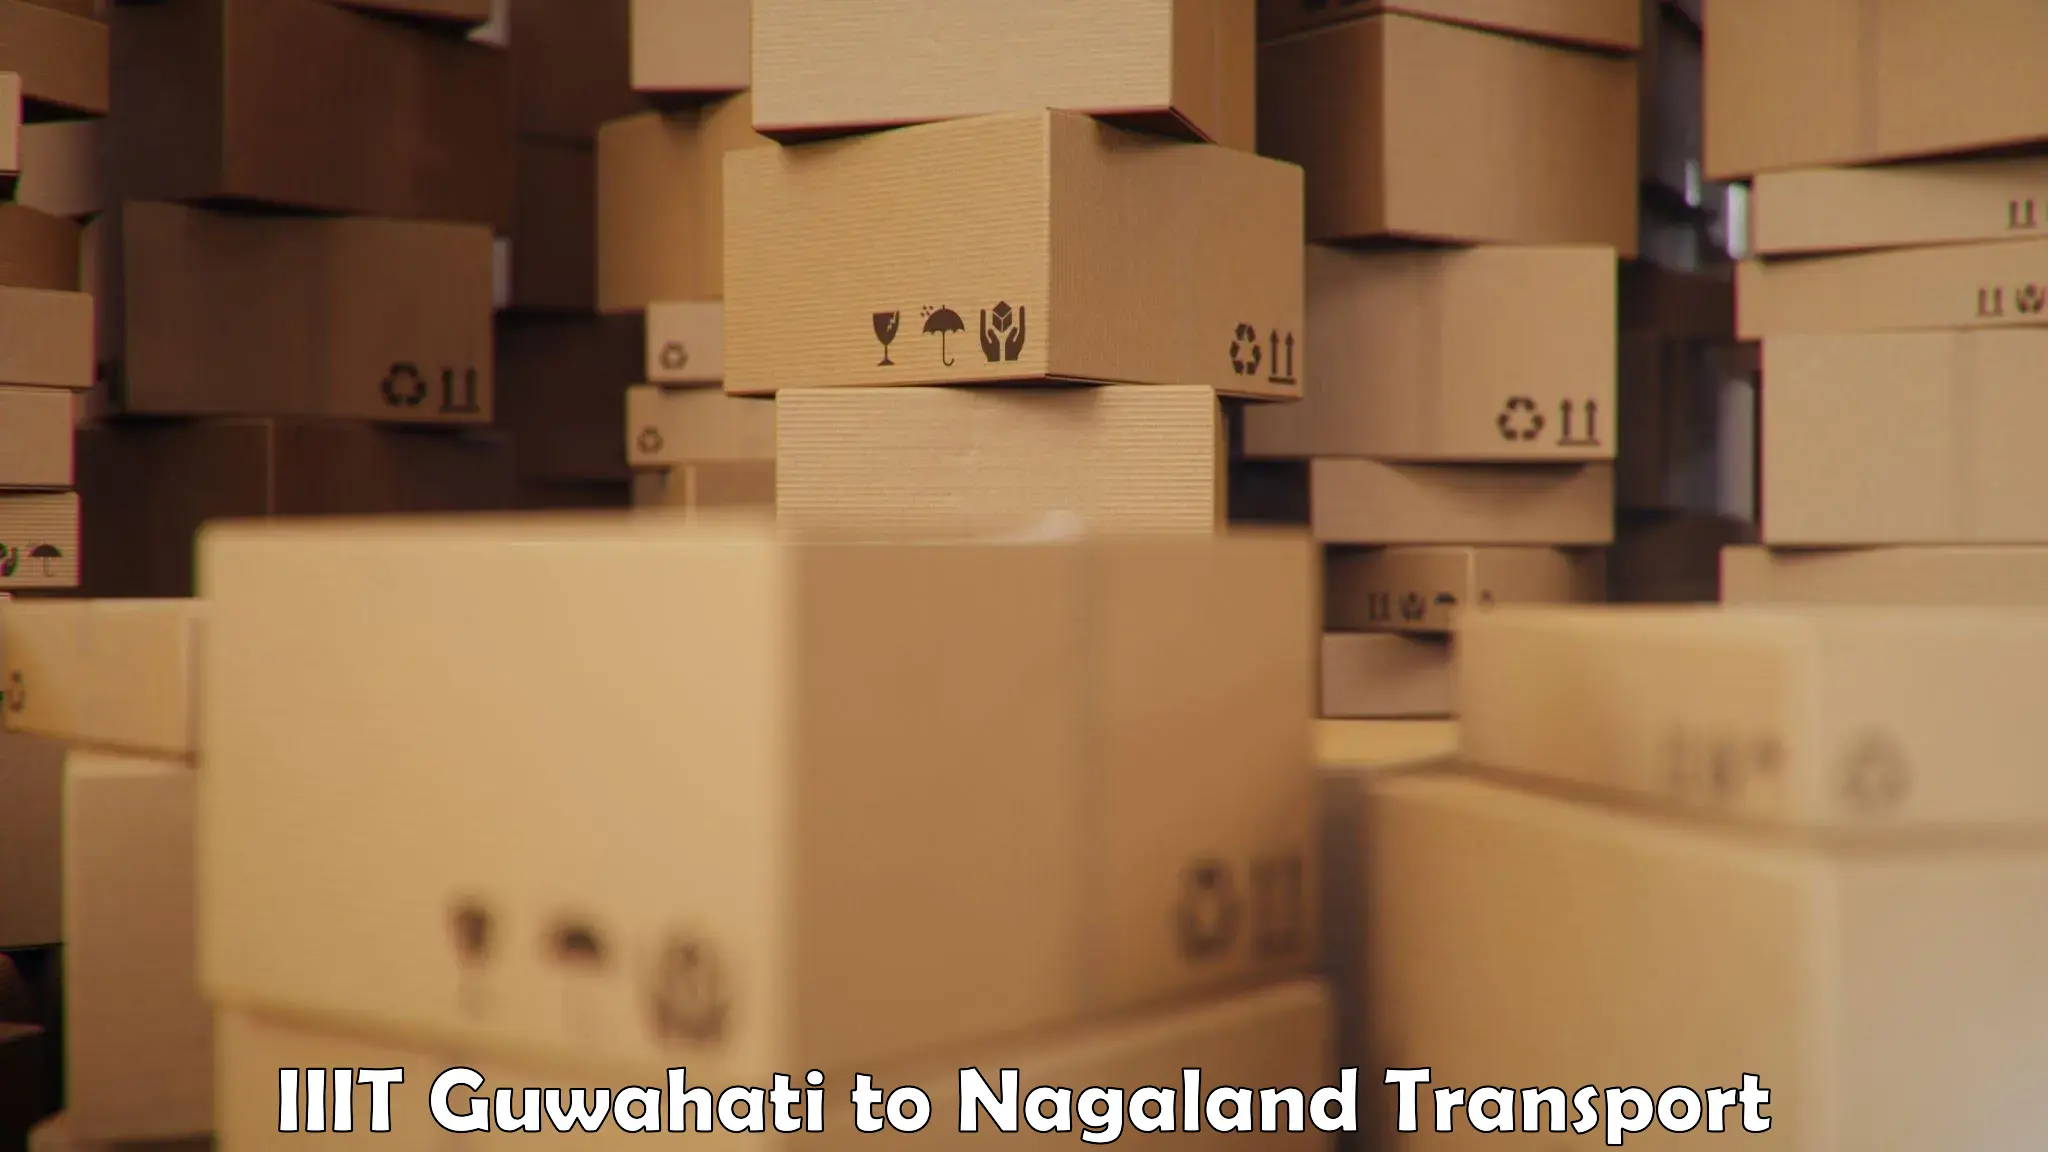 Online transport service IIIT Guwahati to Dimapur